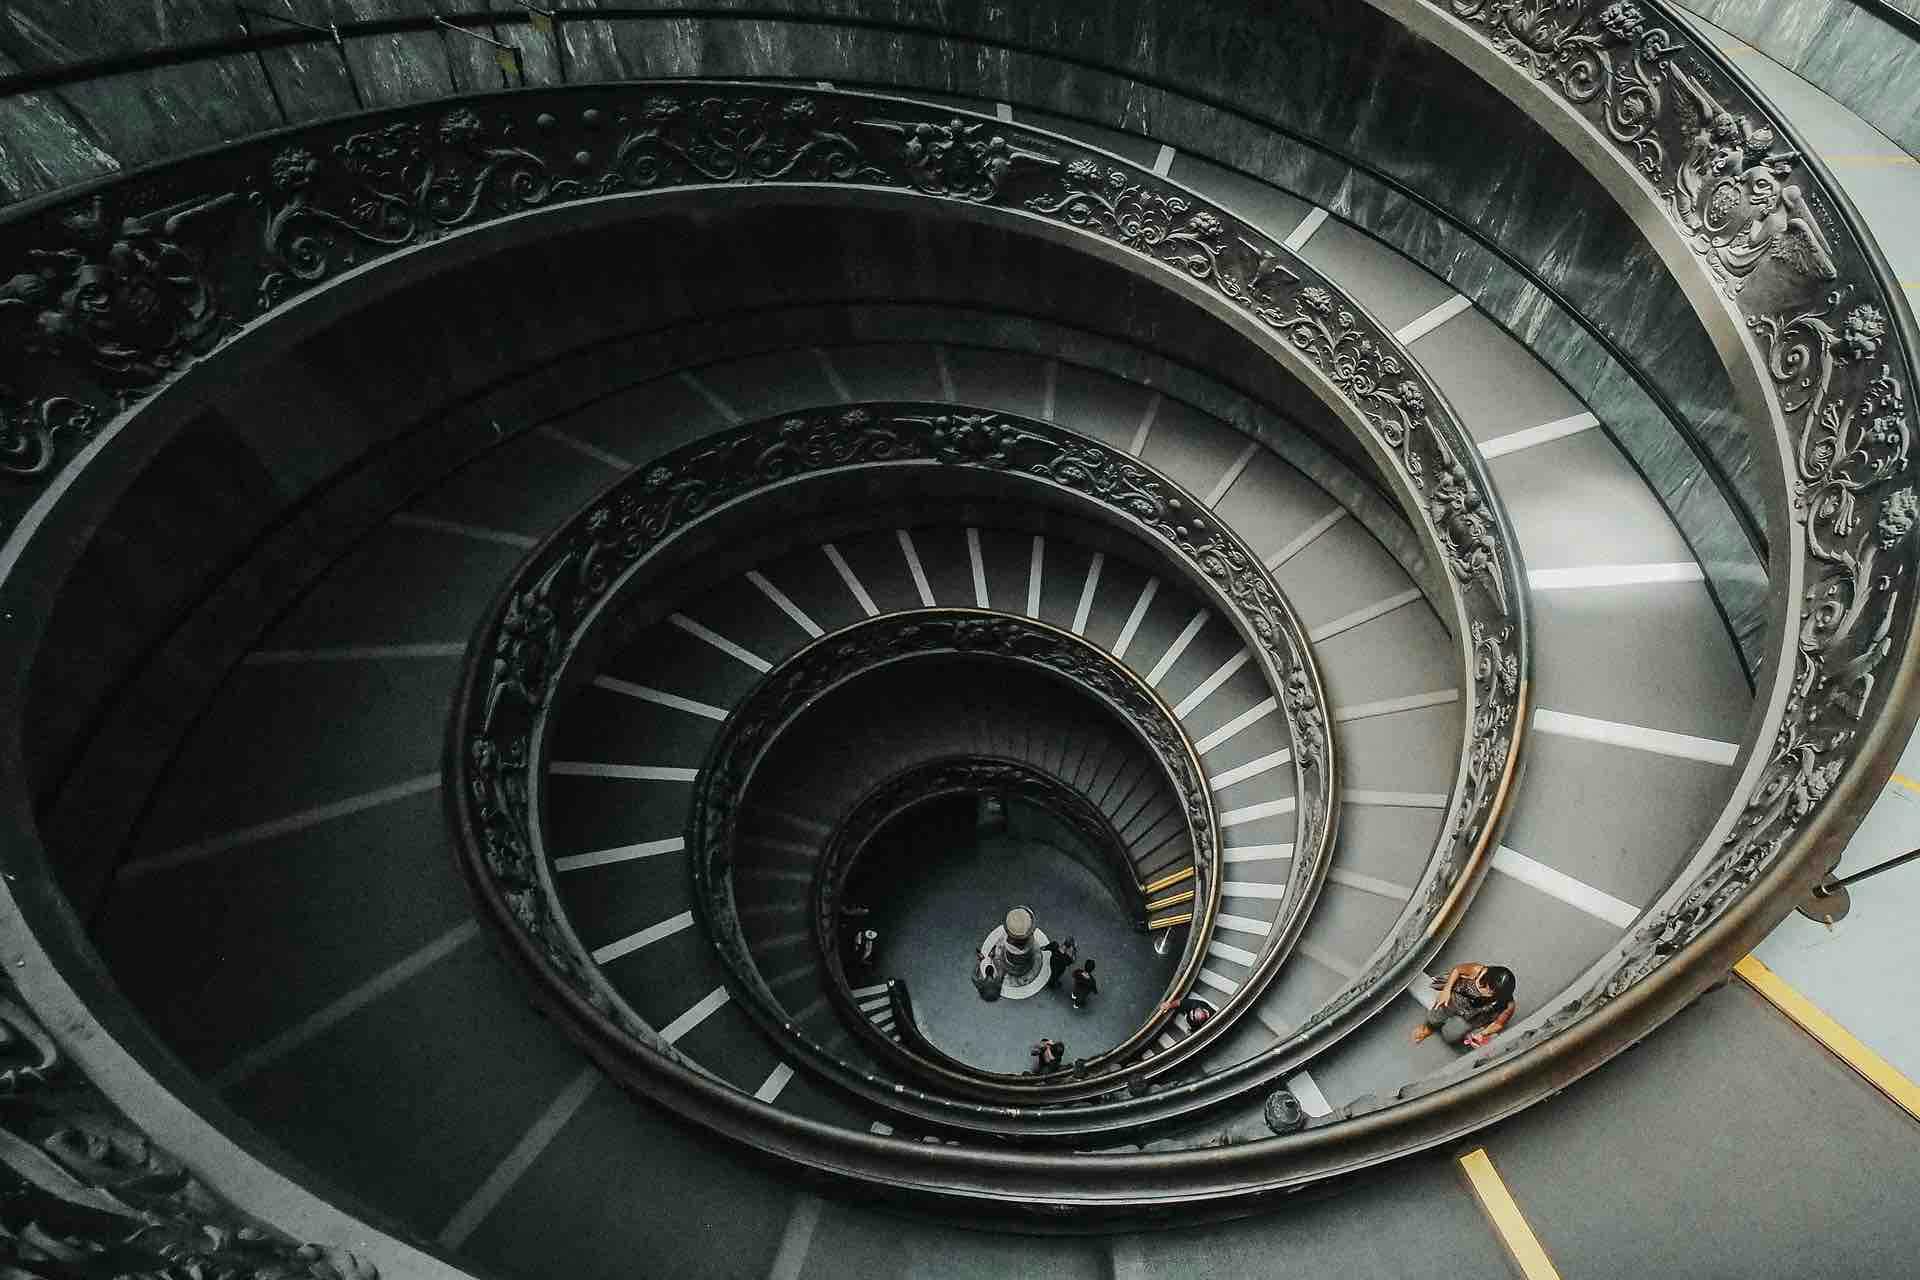 A staircase resembling the Fibinacci spiral